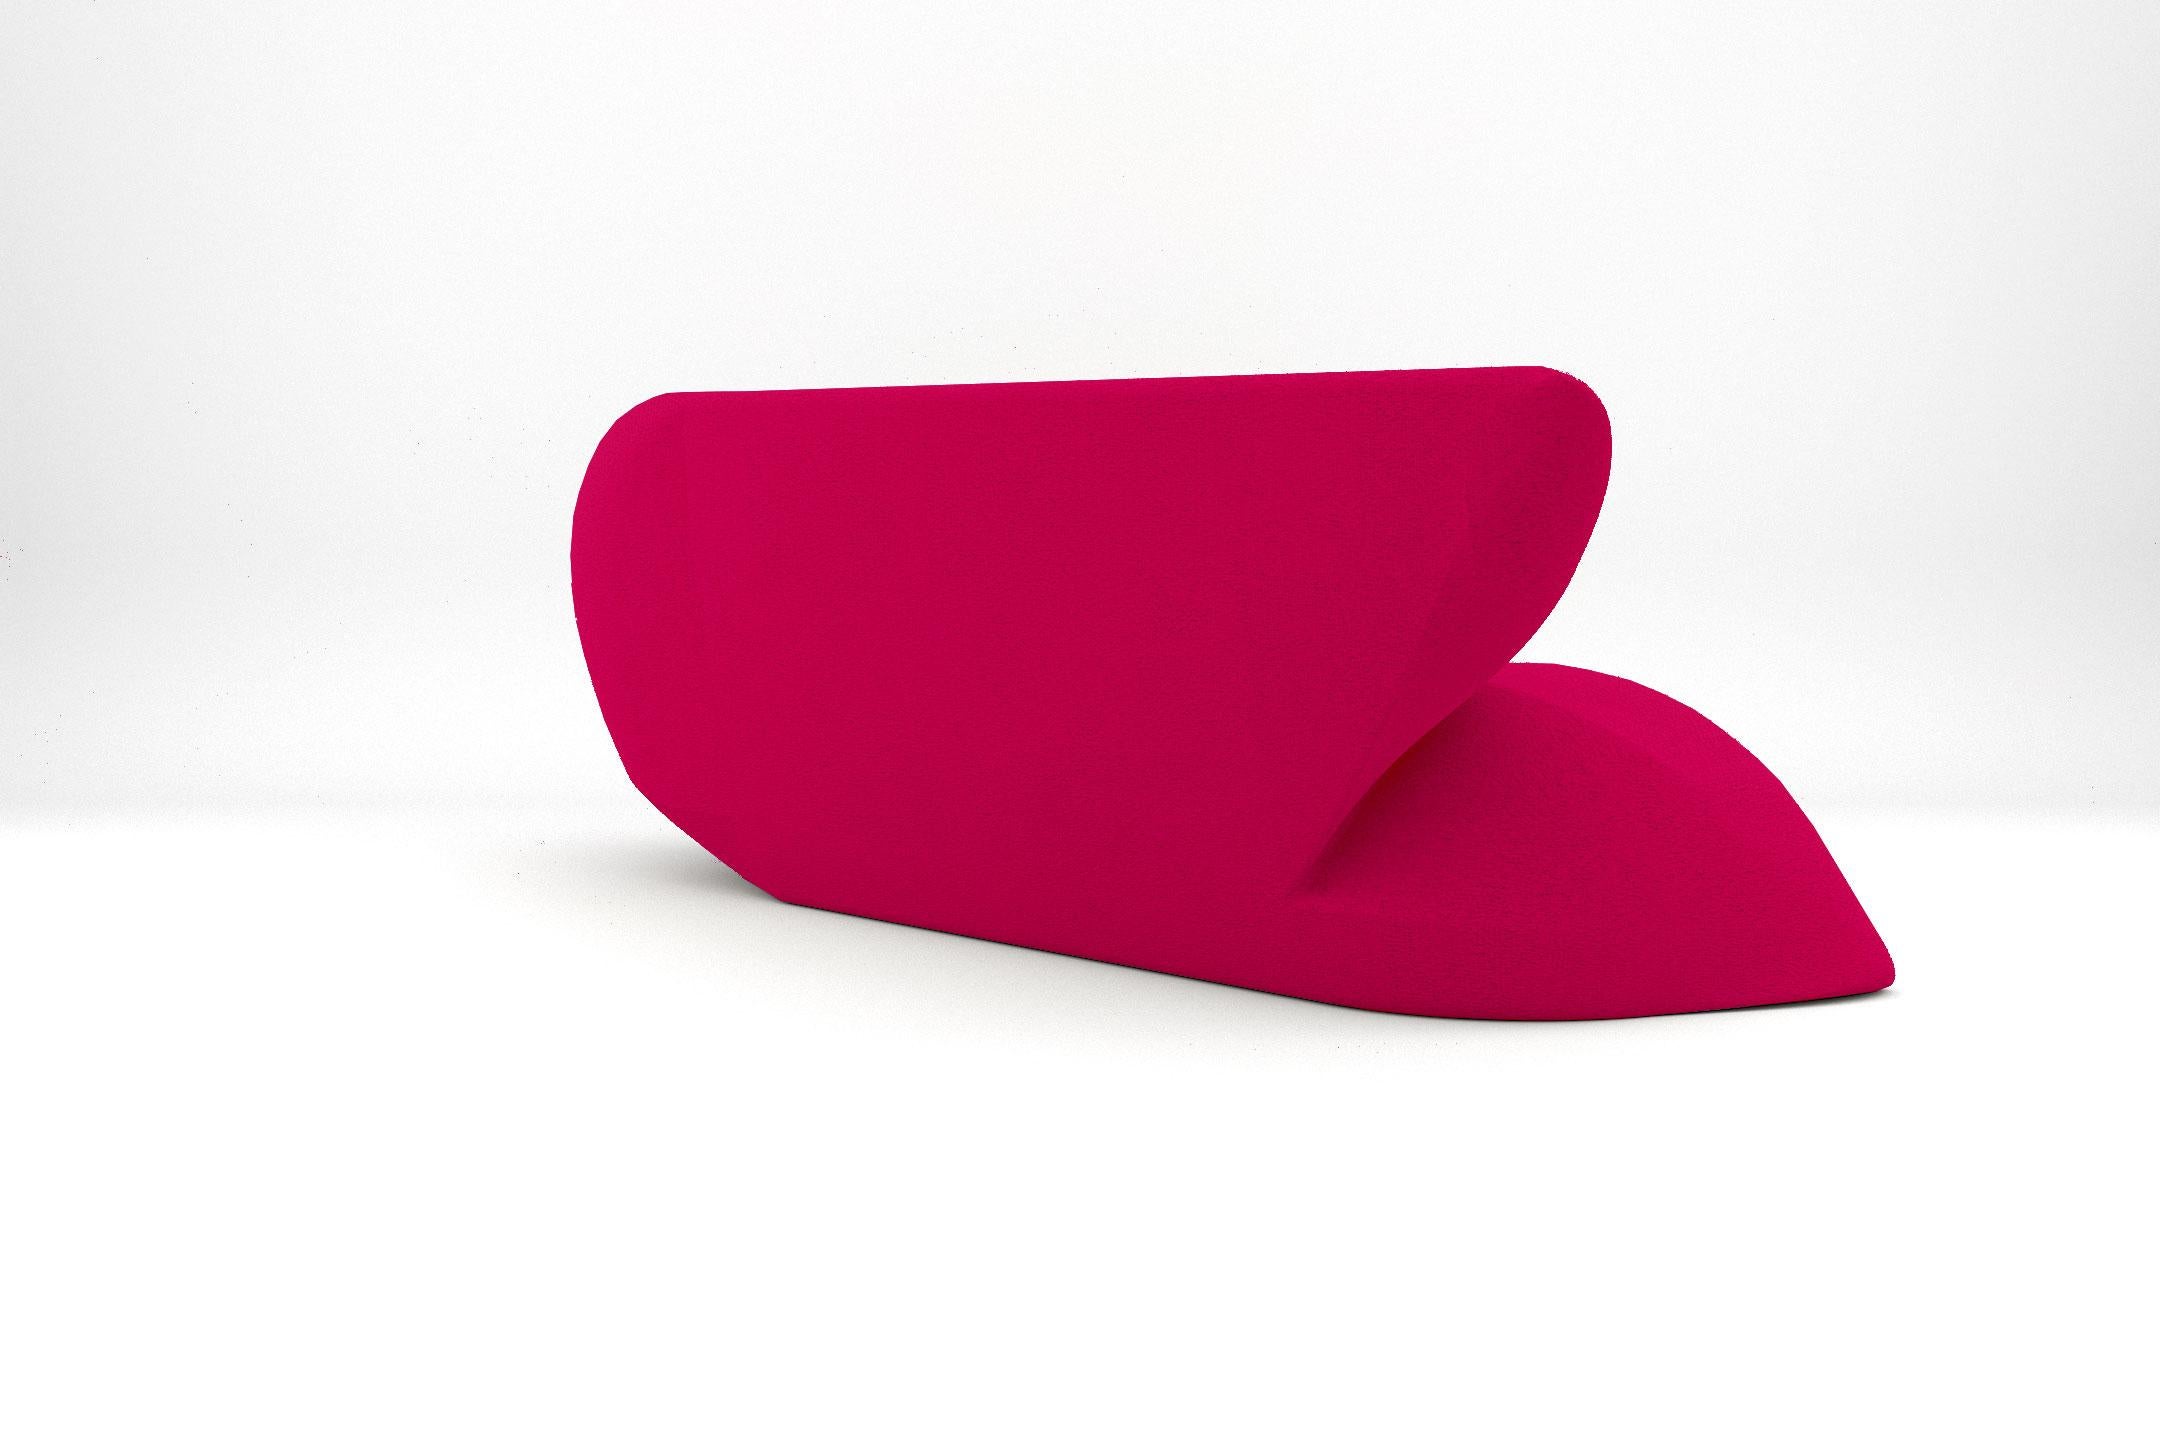 European Delta Sofa - Modern Raspberry Red Upholstered Three Seat Sofa For Sale